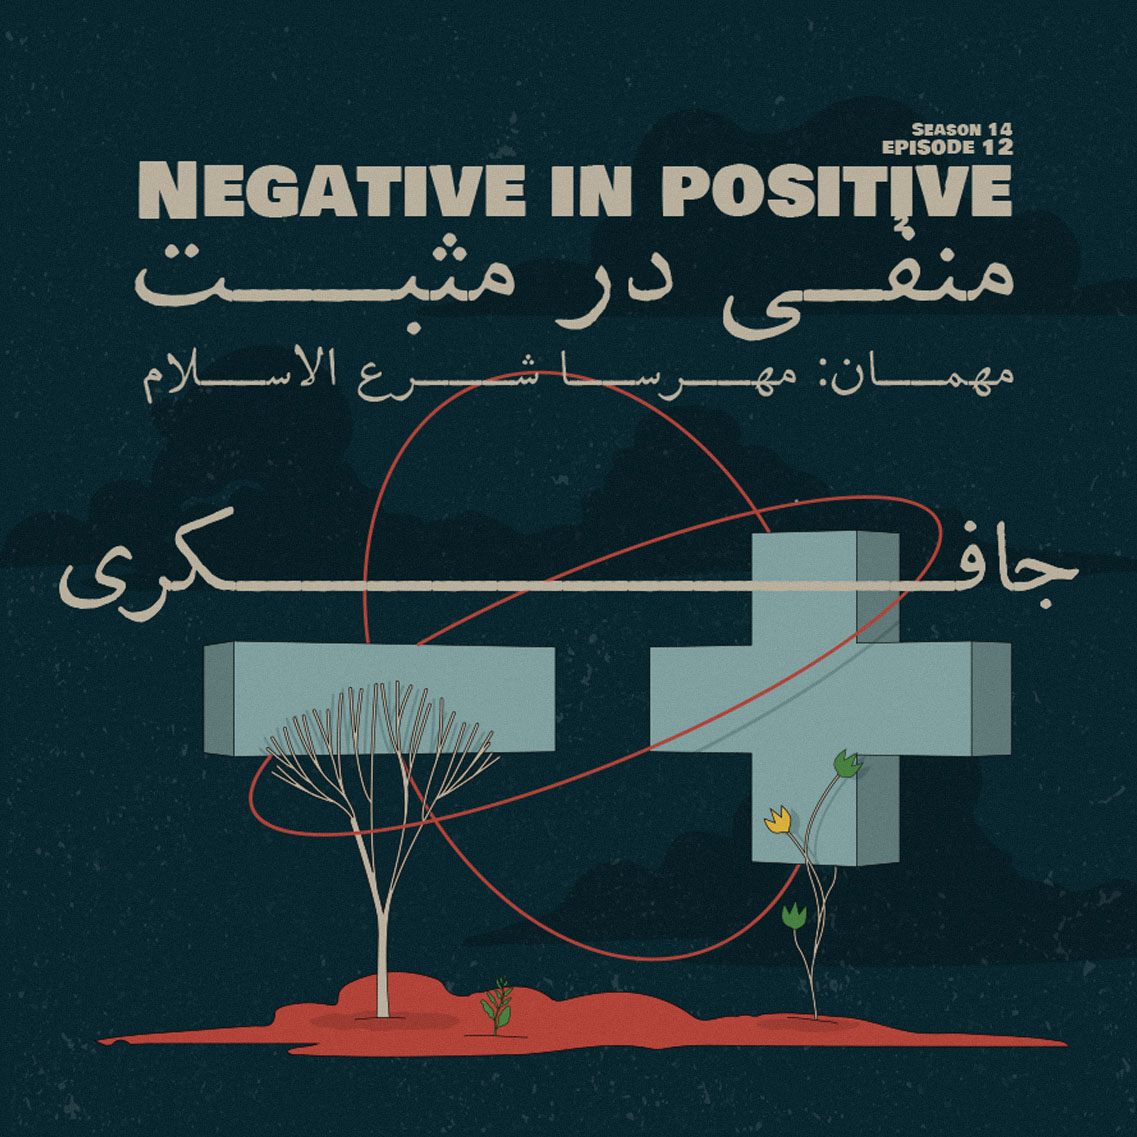 Episode 12 - Negative in Positive (منفی در مثبت)